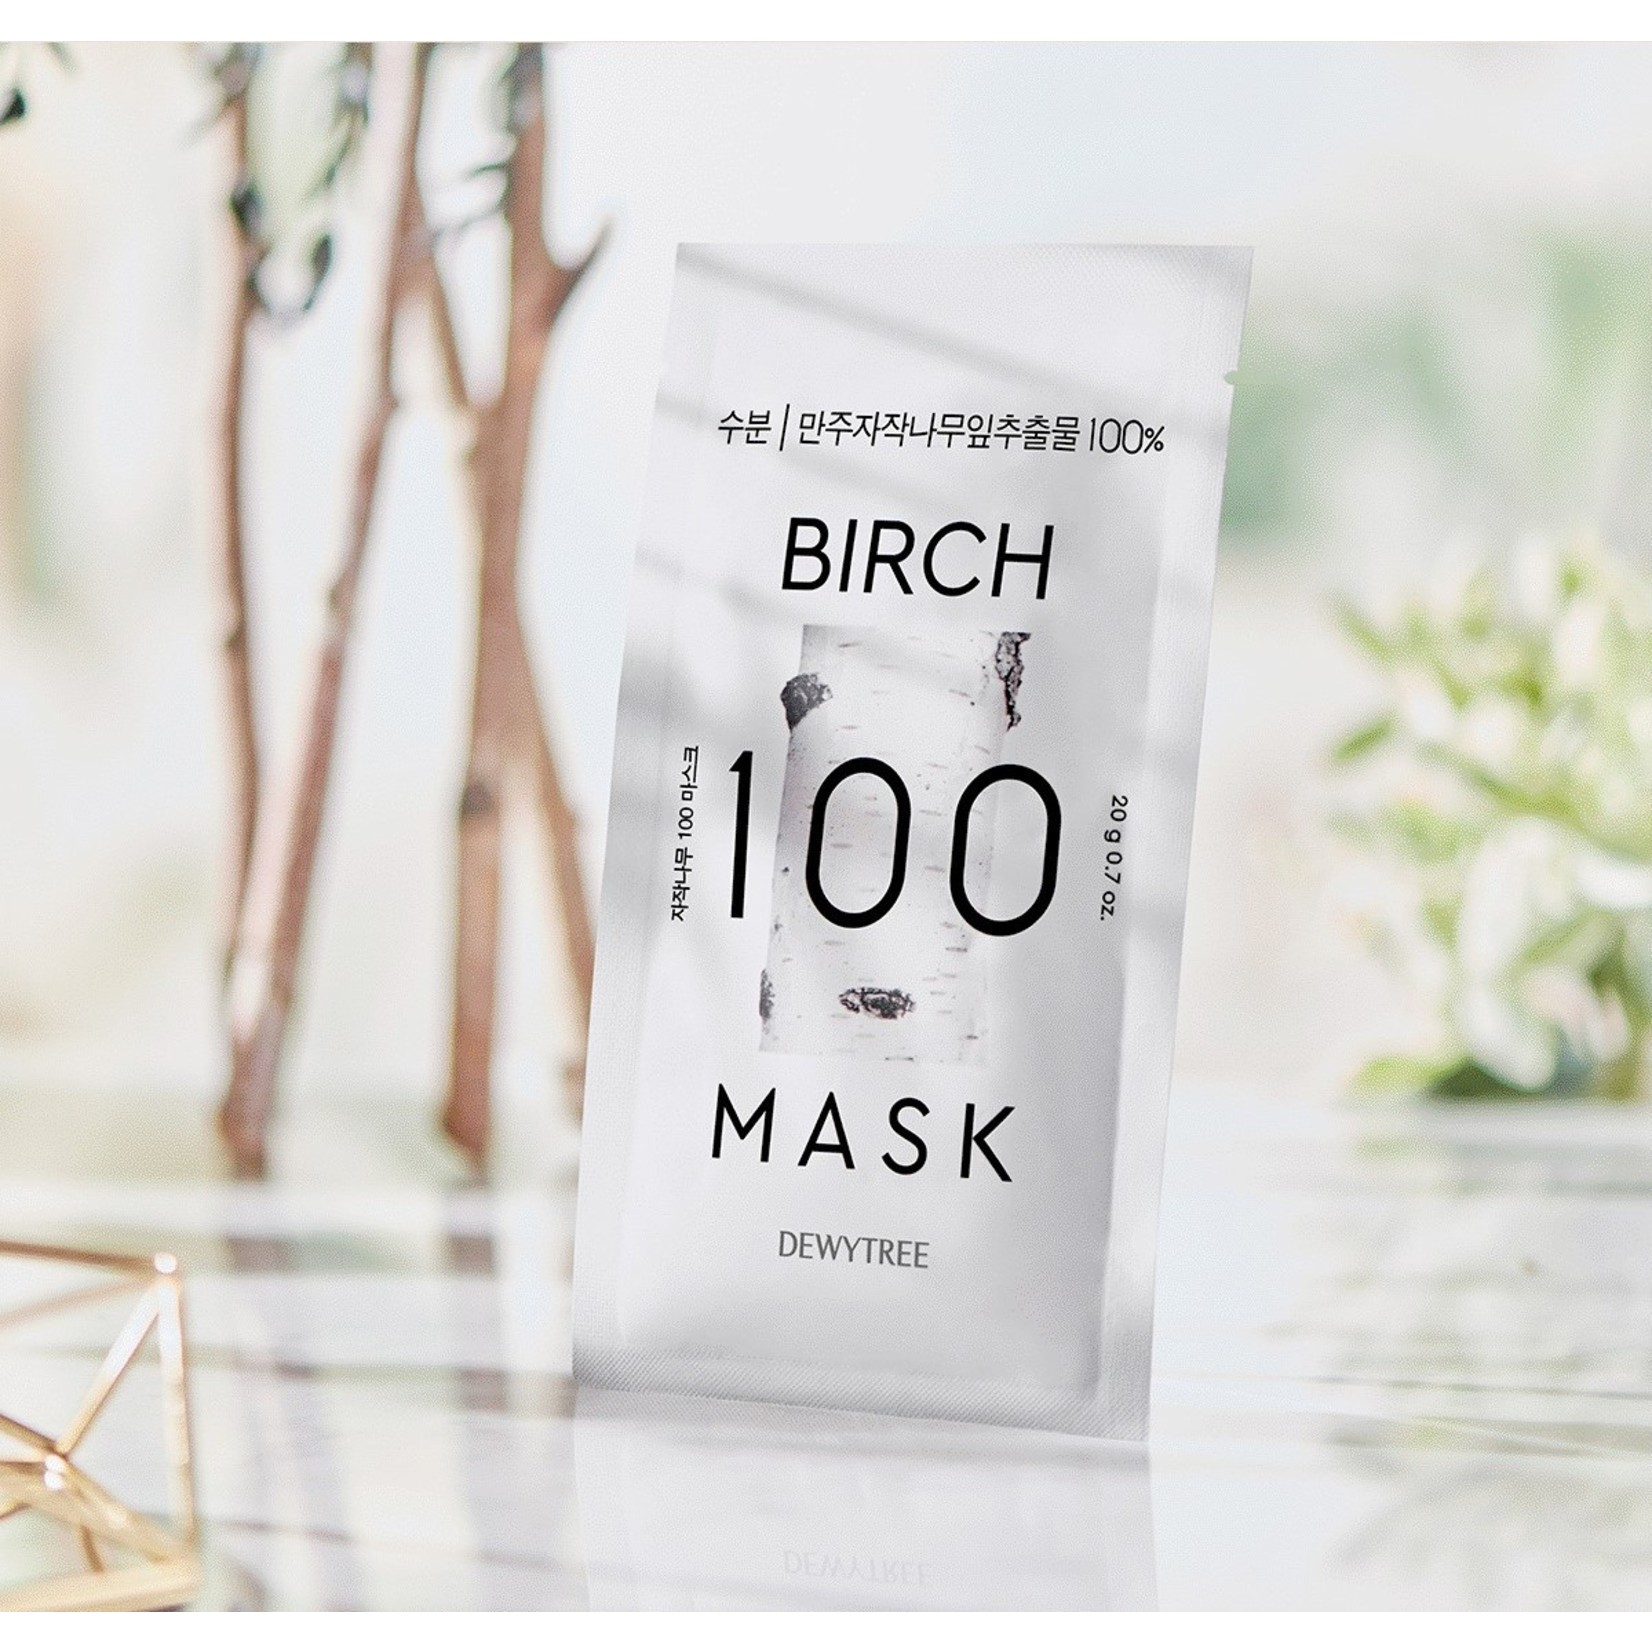 Dewytree BIRCH 100 Sheet Mask